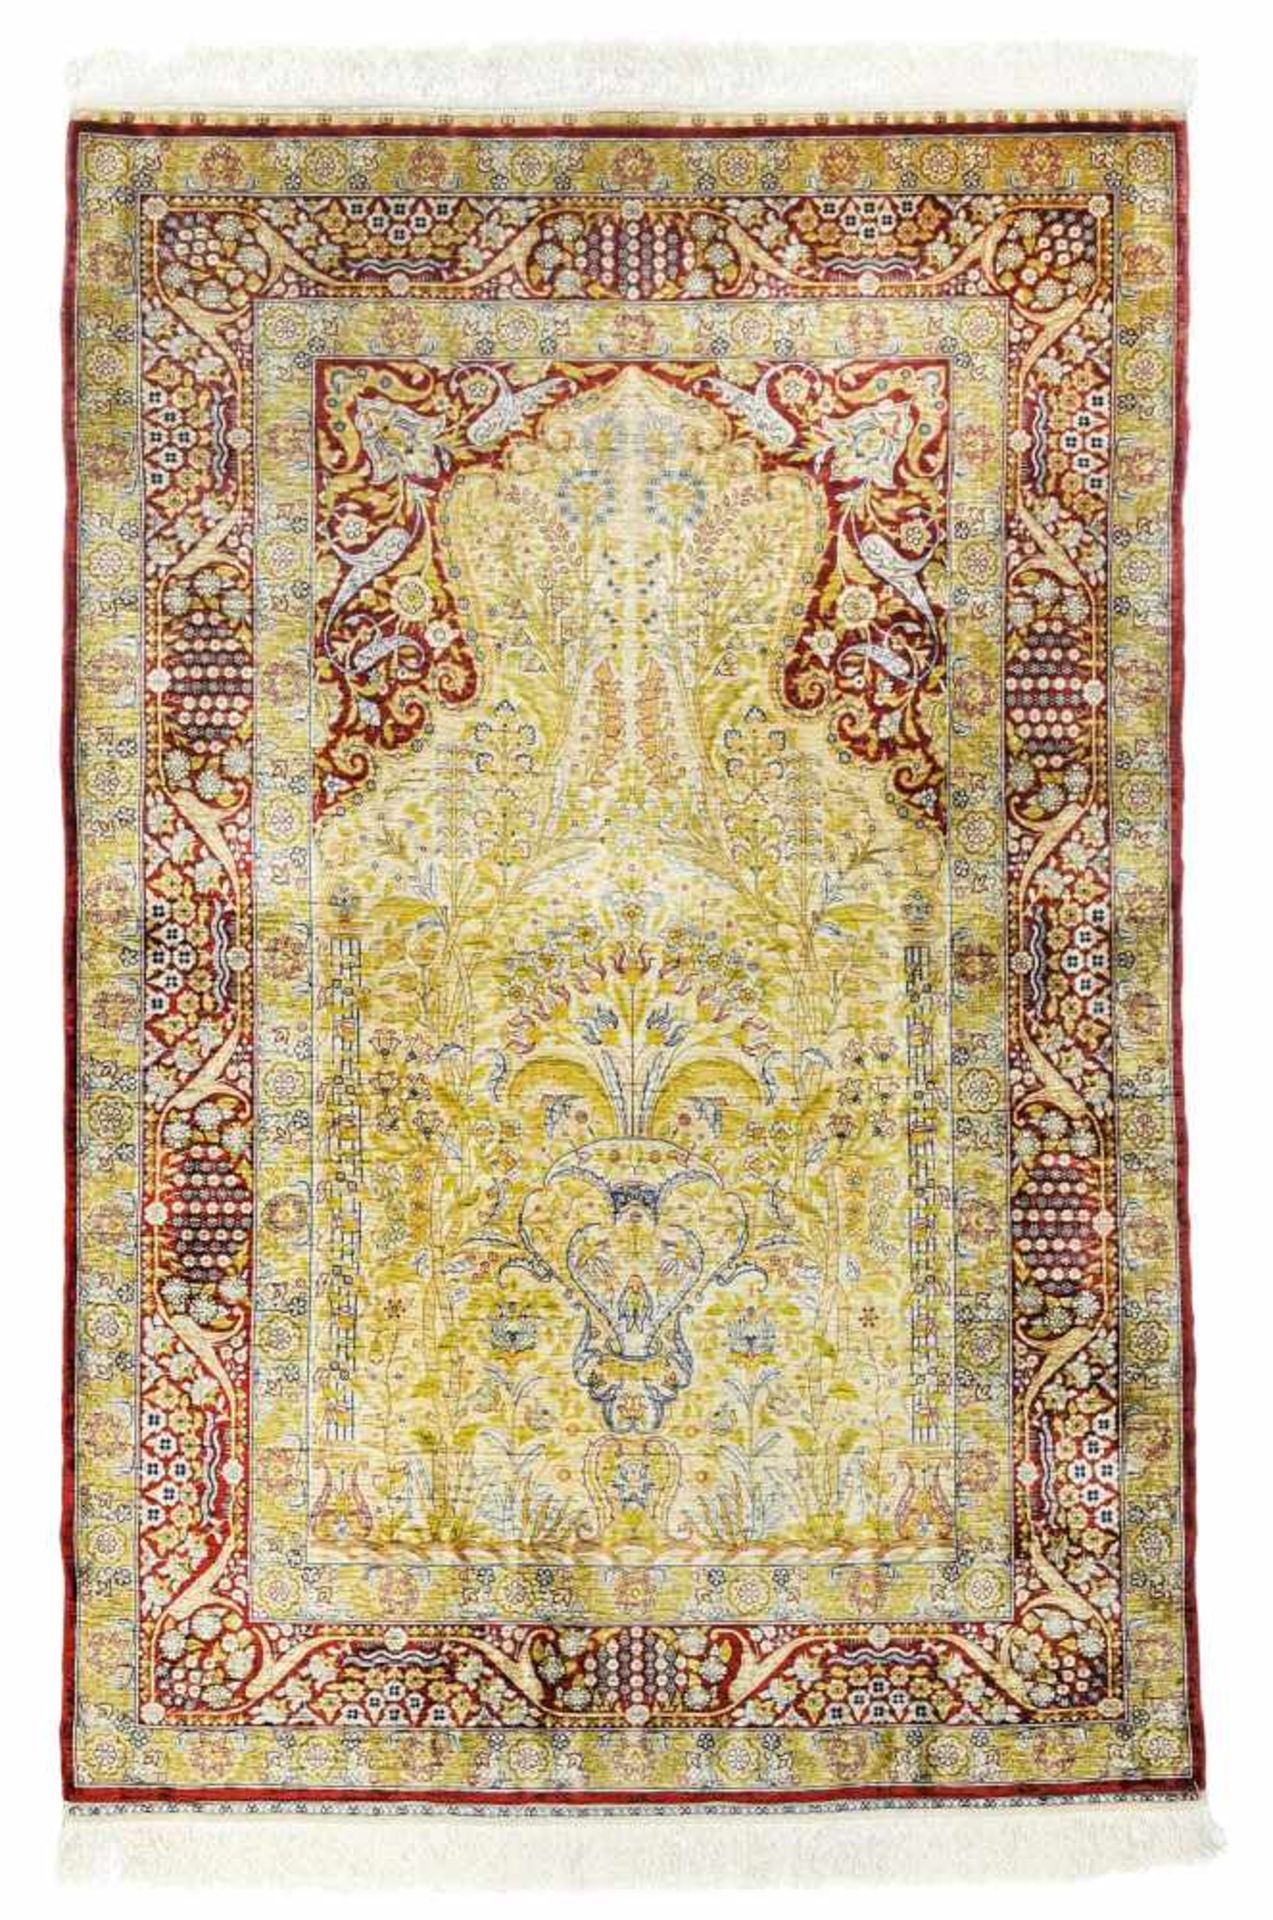 A Hereke silk prayer rug, Turkey, 20th ct. Well preserved.